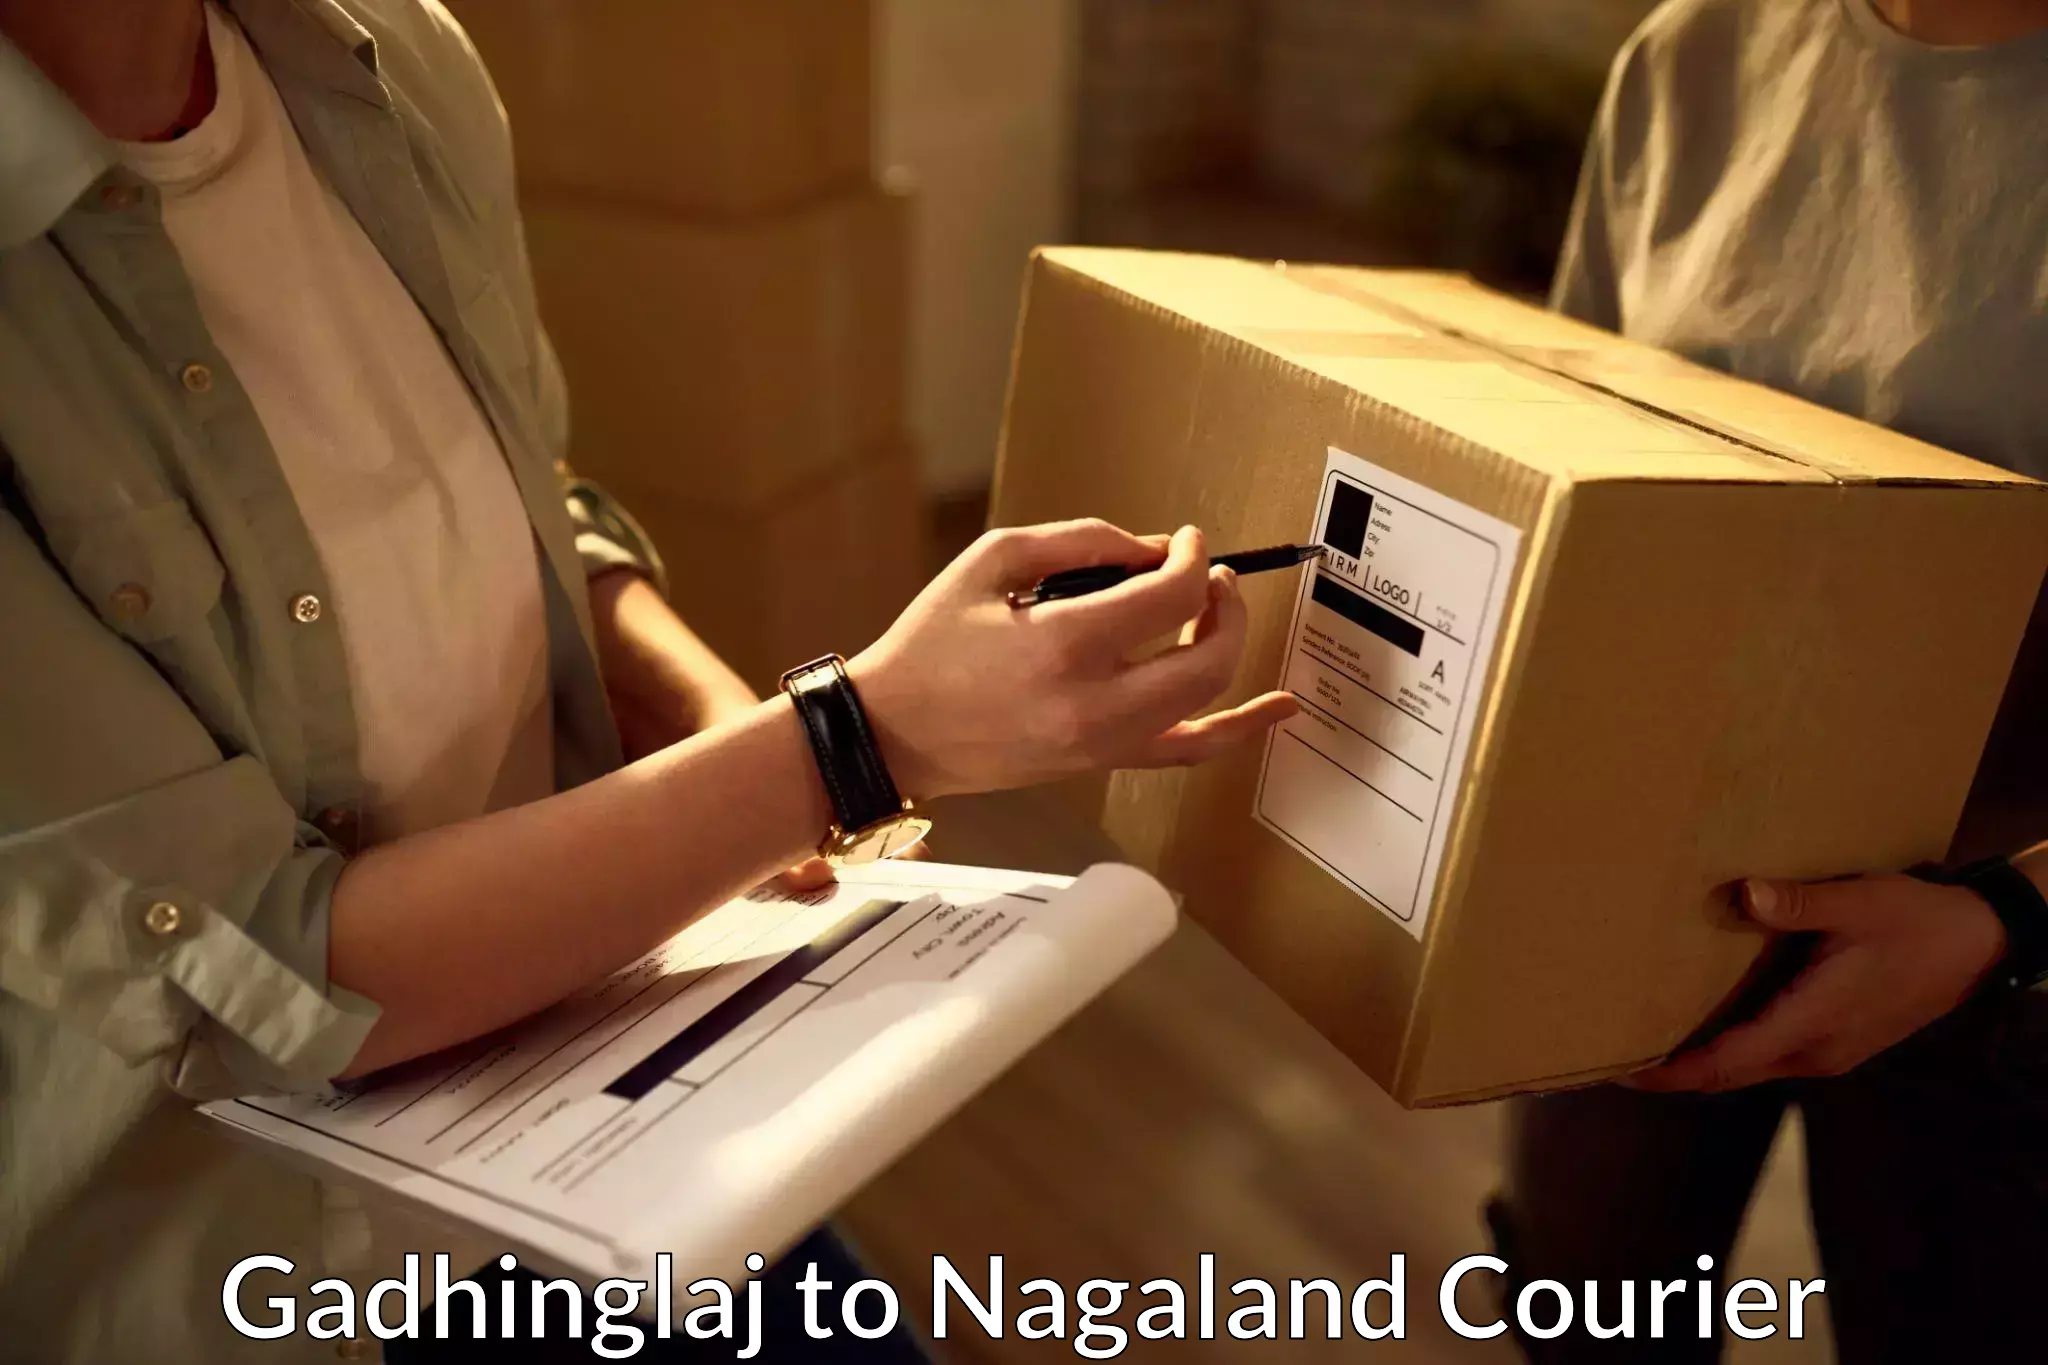 Courier service booking Gadhinglaj to Nagaland